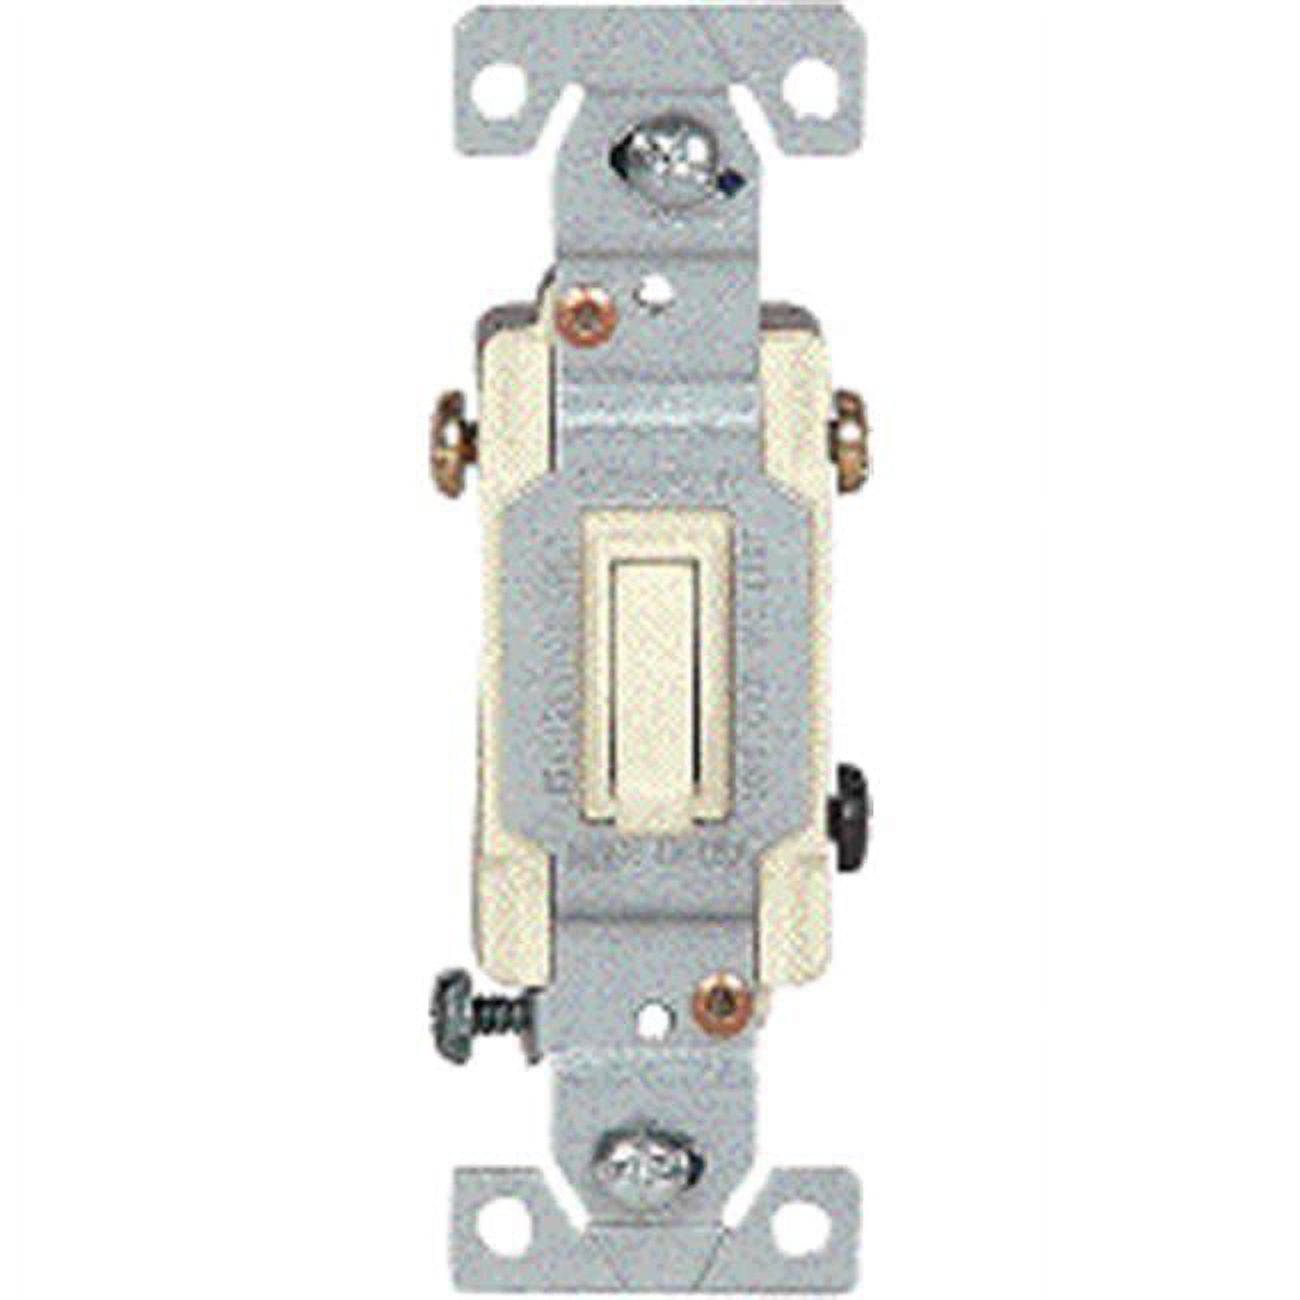 Cooper Wiring 1303-7v-box 120v Switch Toggle 3-way, Ivory